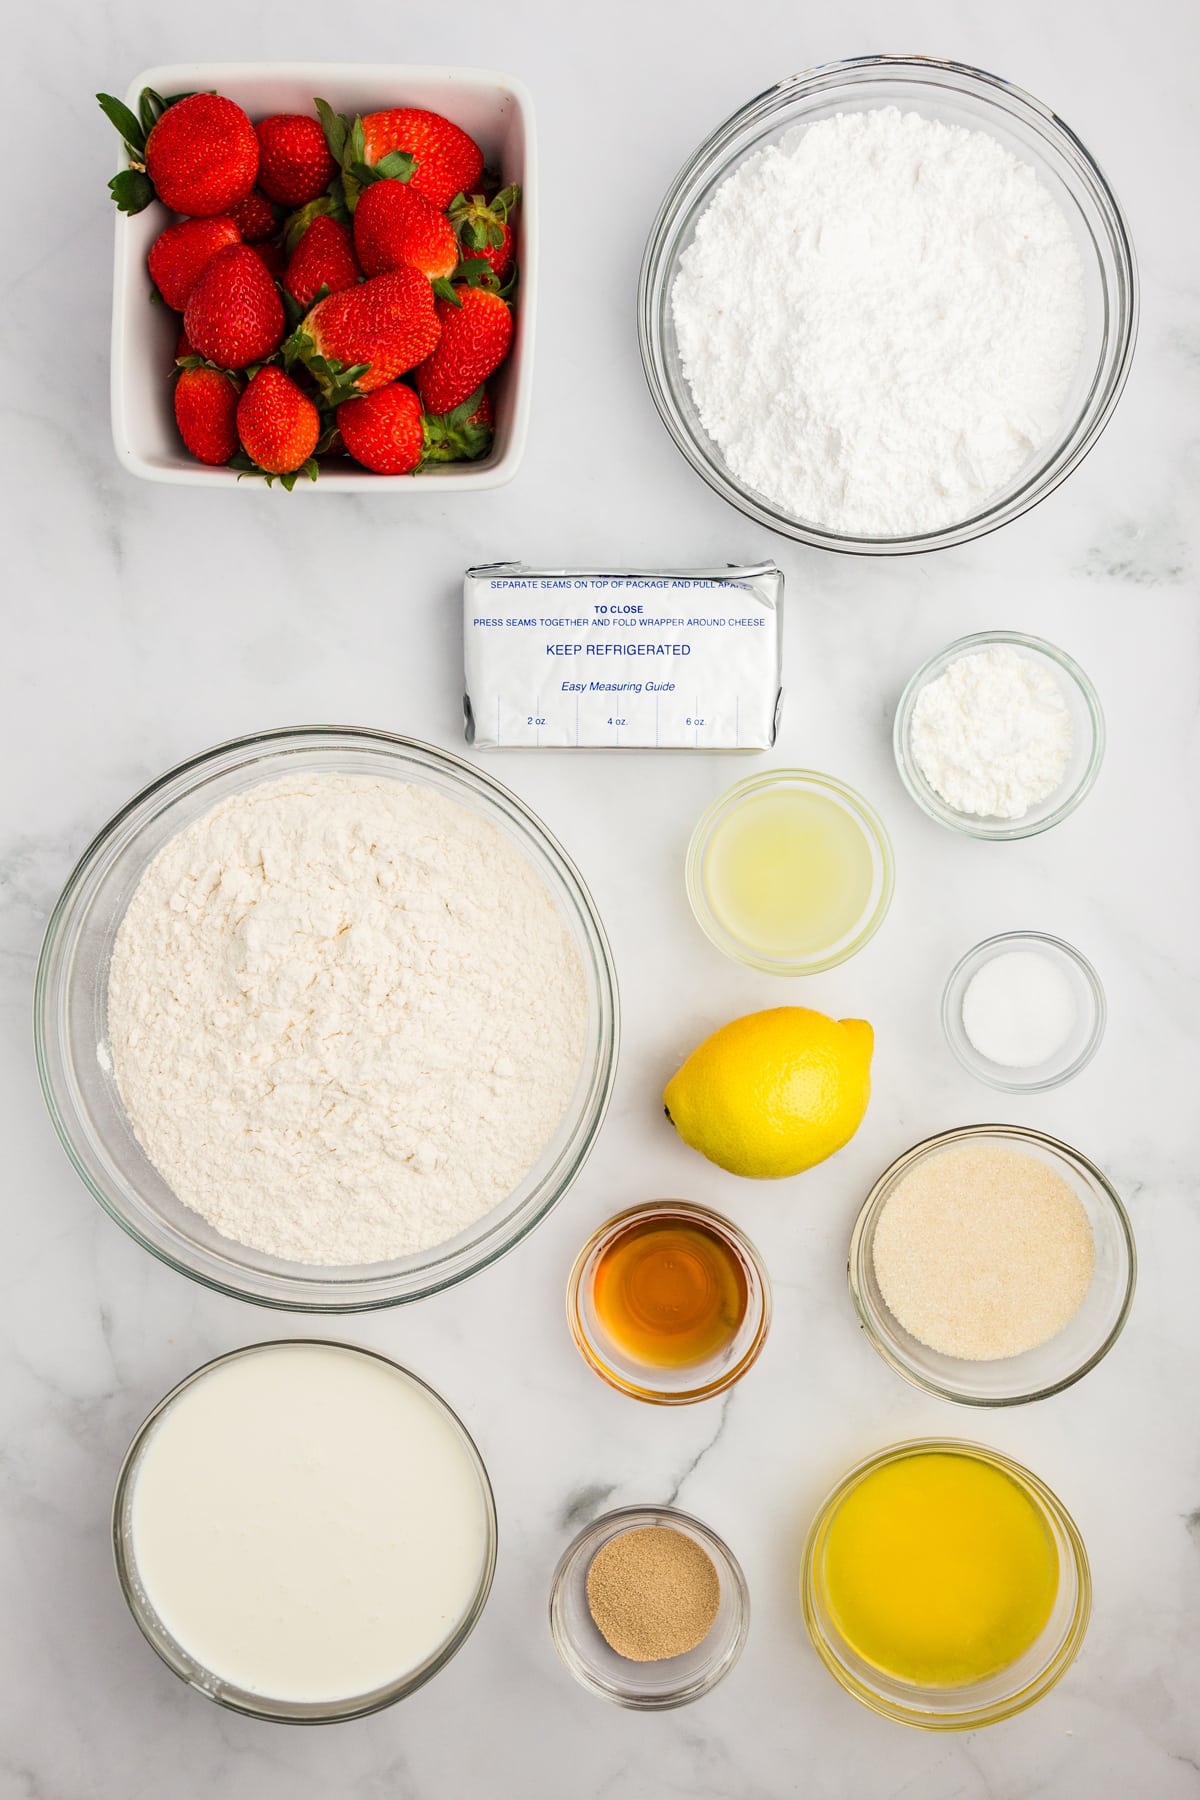 ingredients needed to make Strawberry Cinnamon Rolls